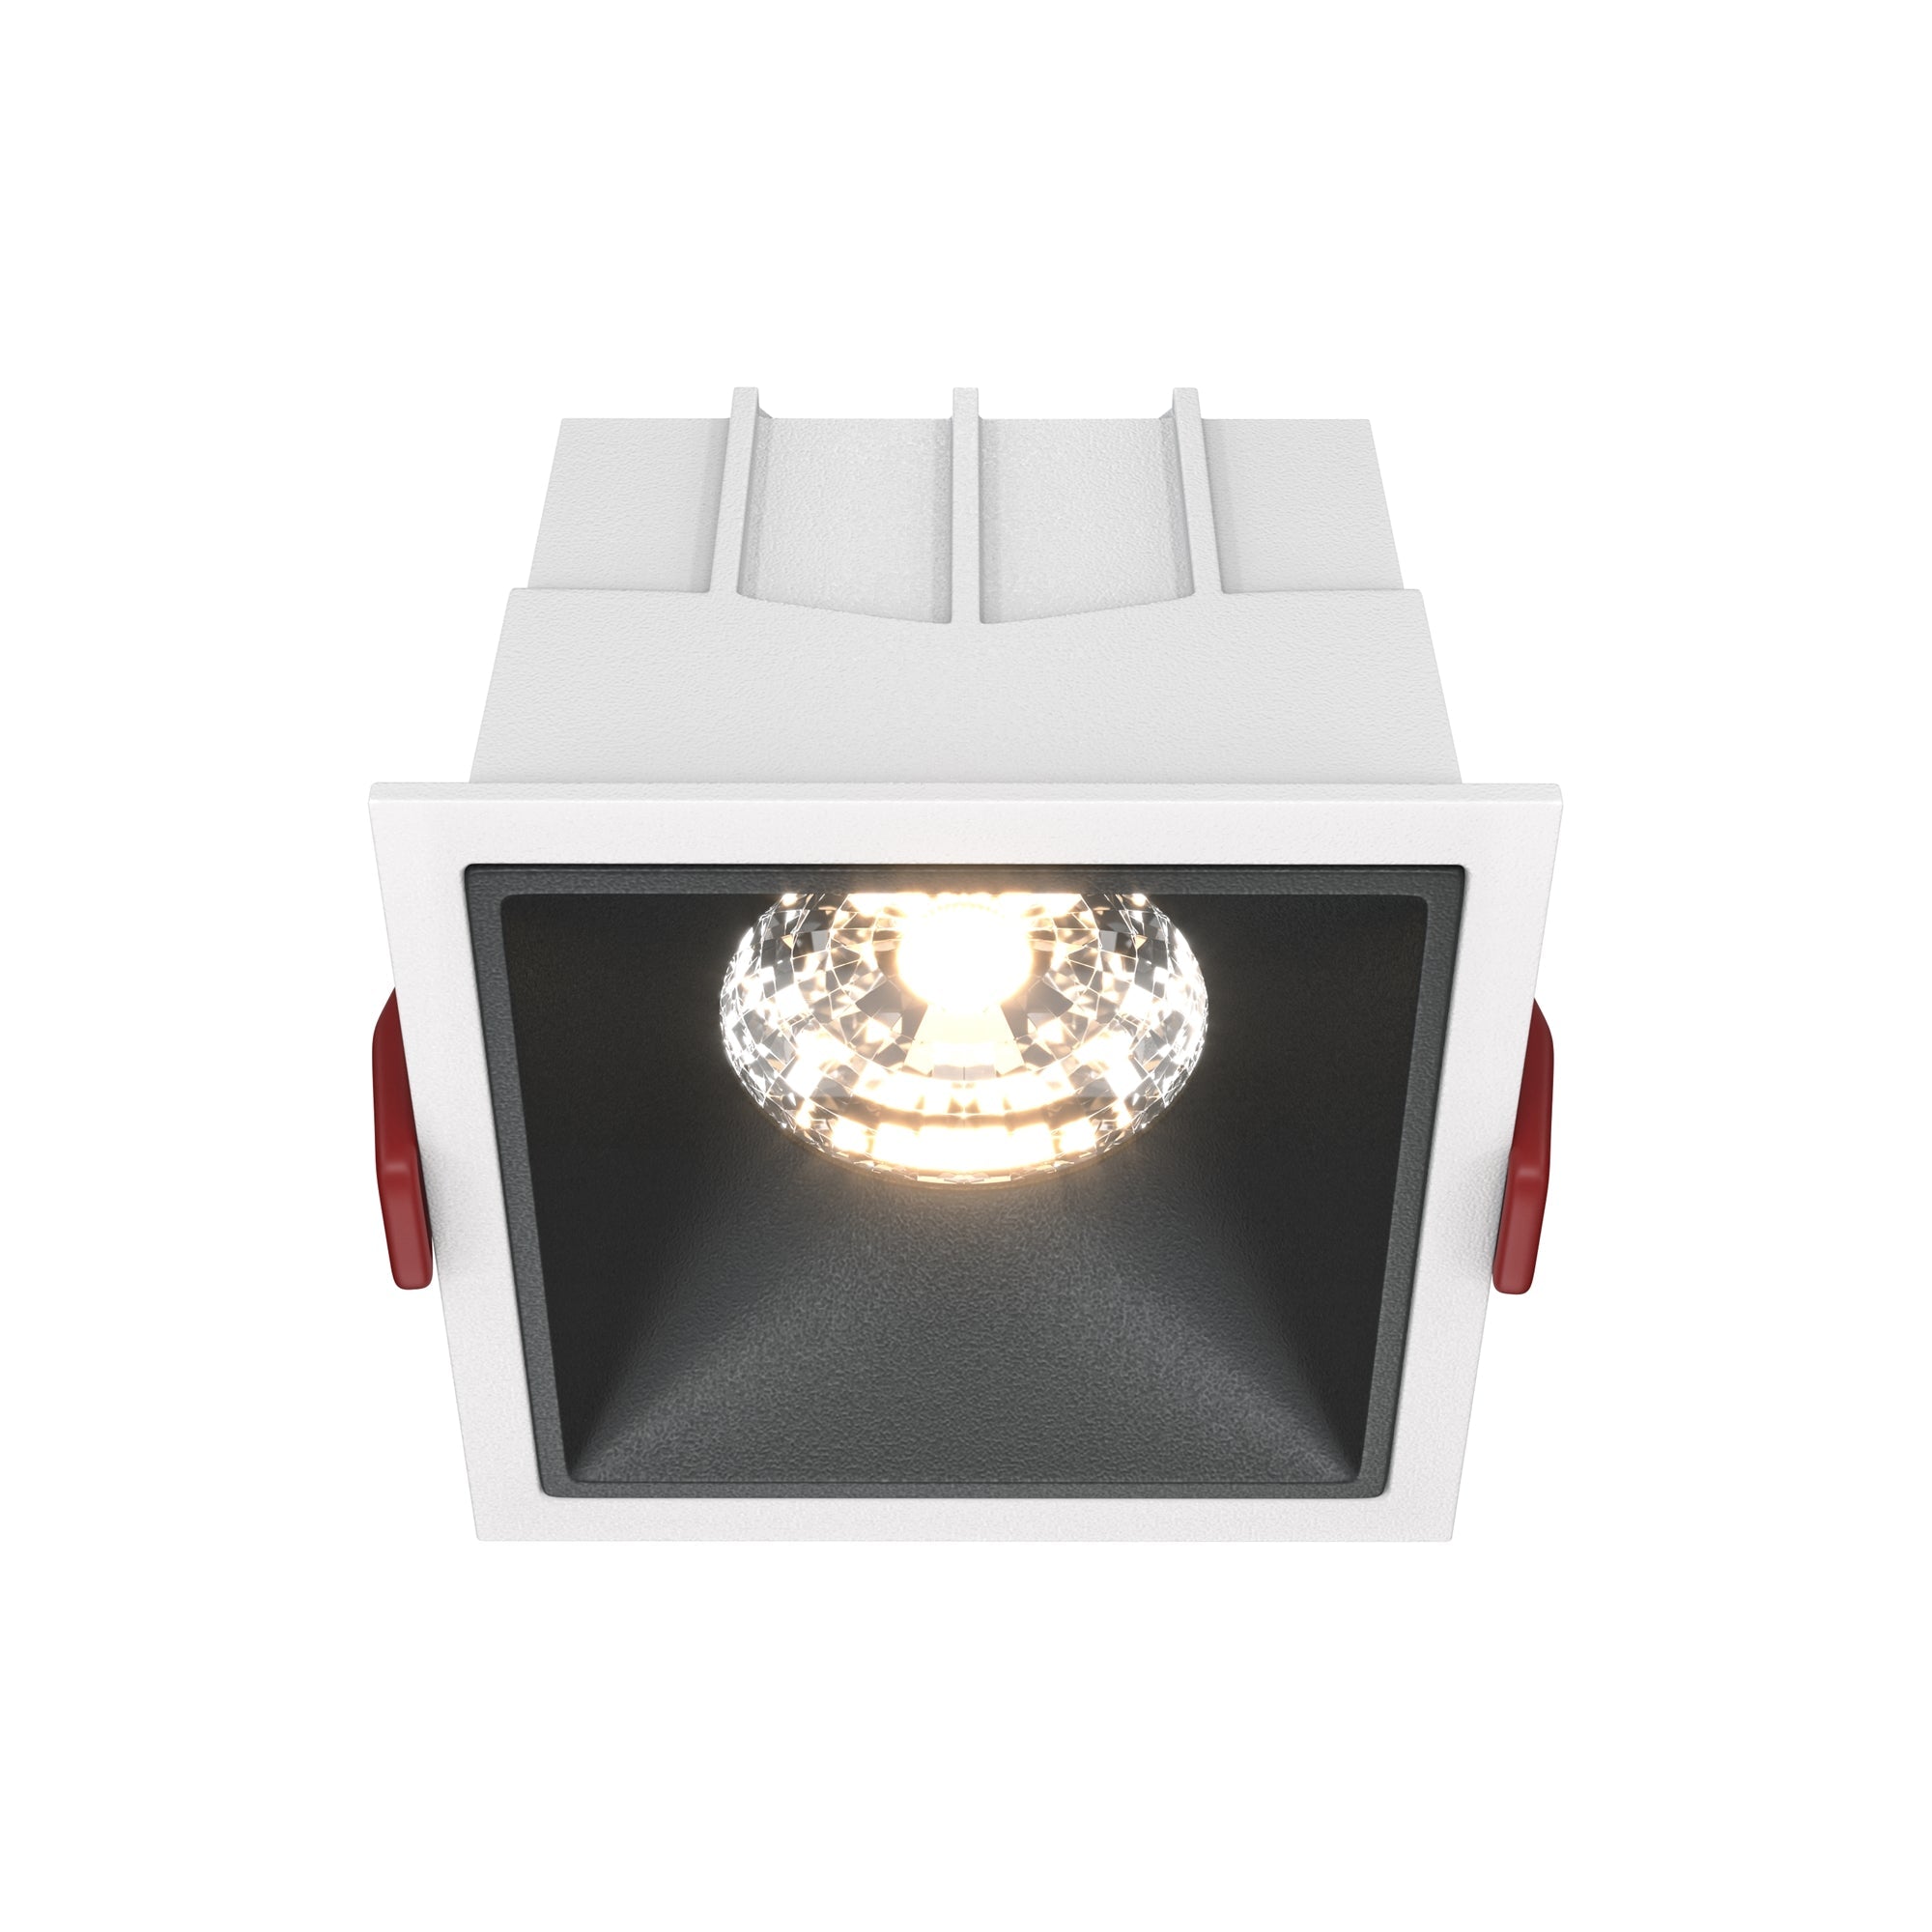 Alfa LED Recessed Ceiling Lights